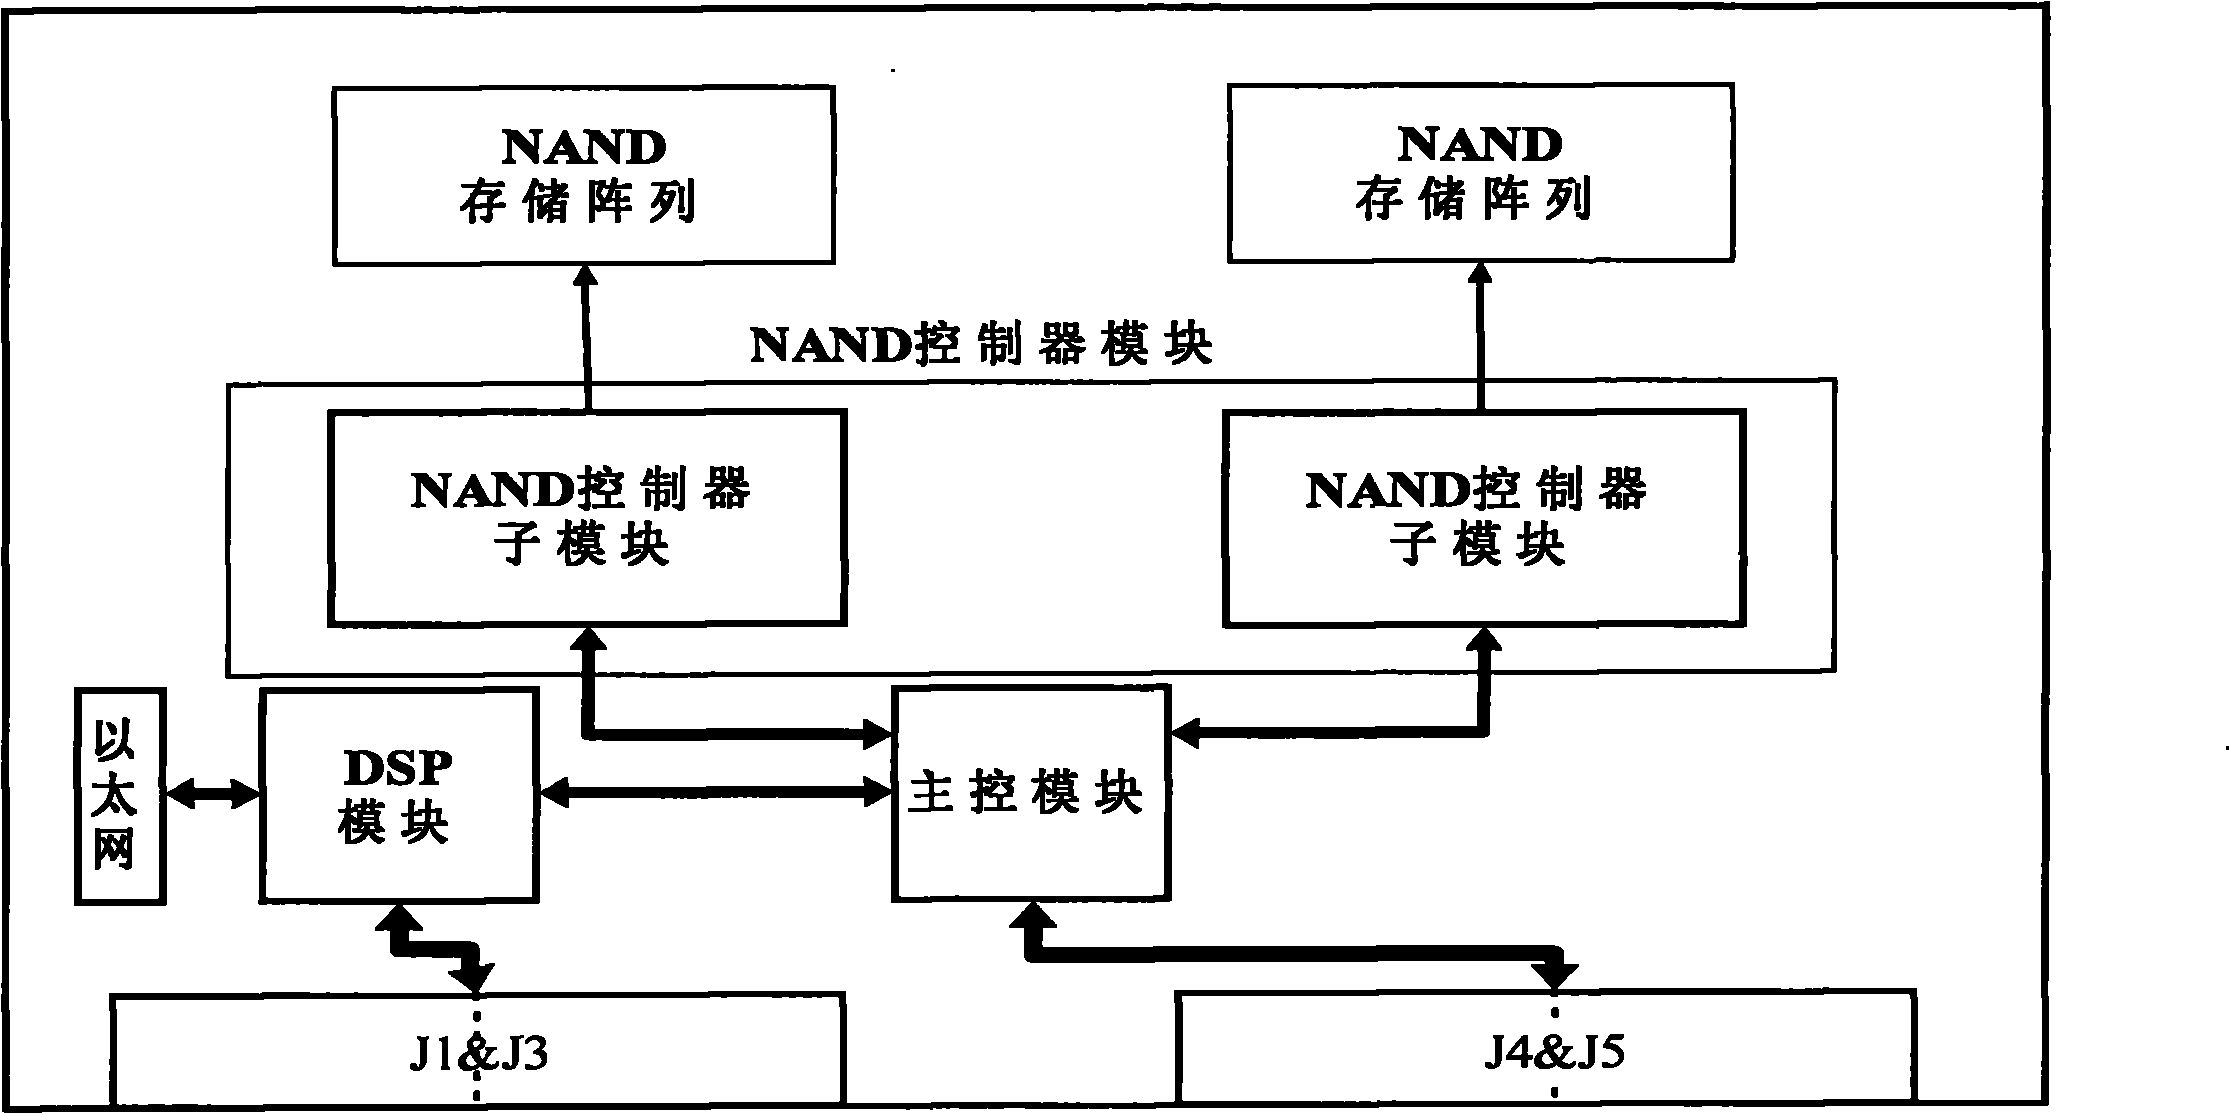 NAND-based memory plate